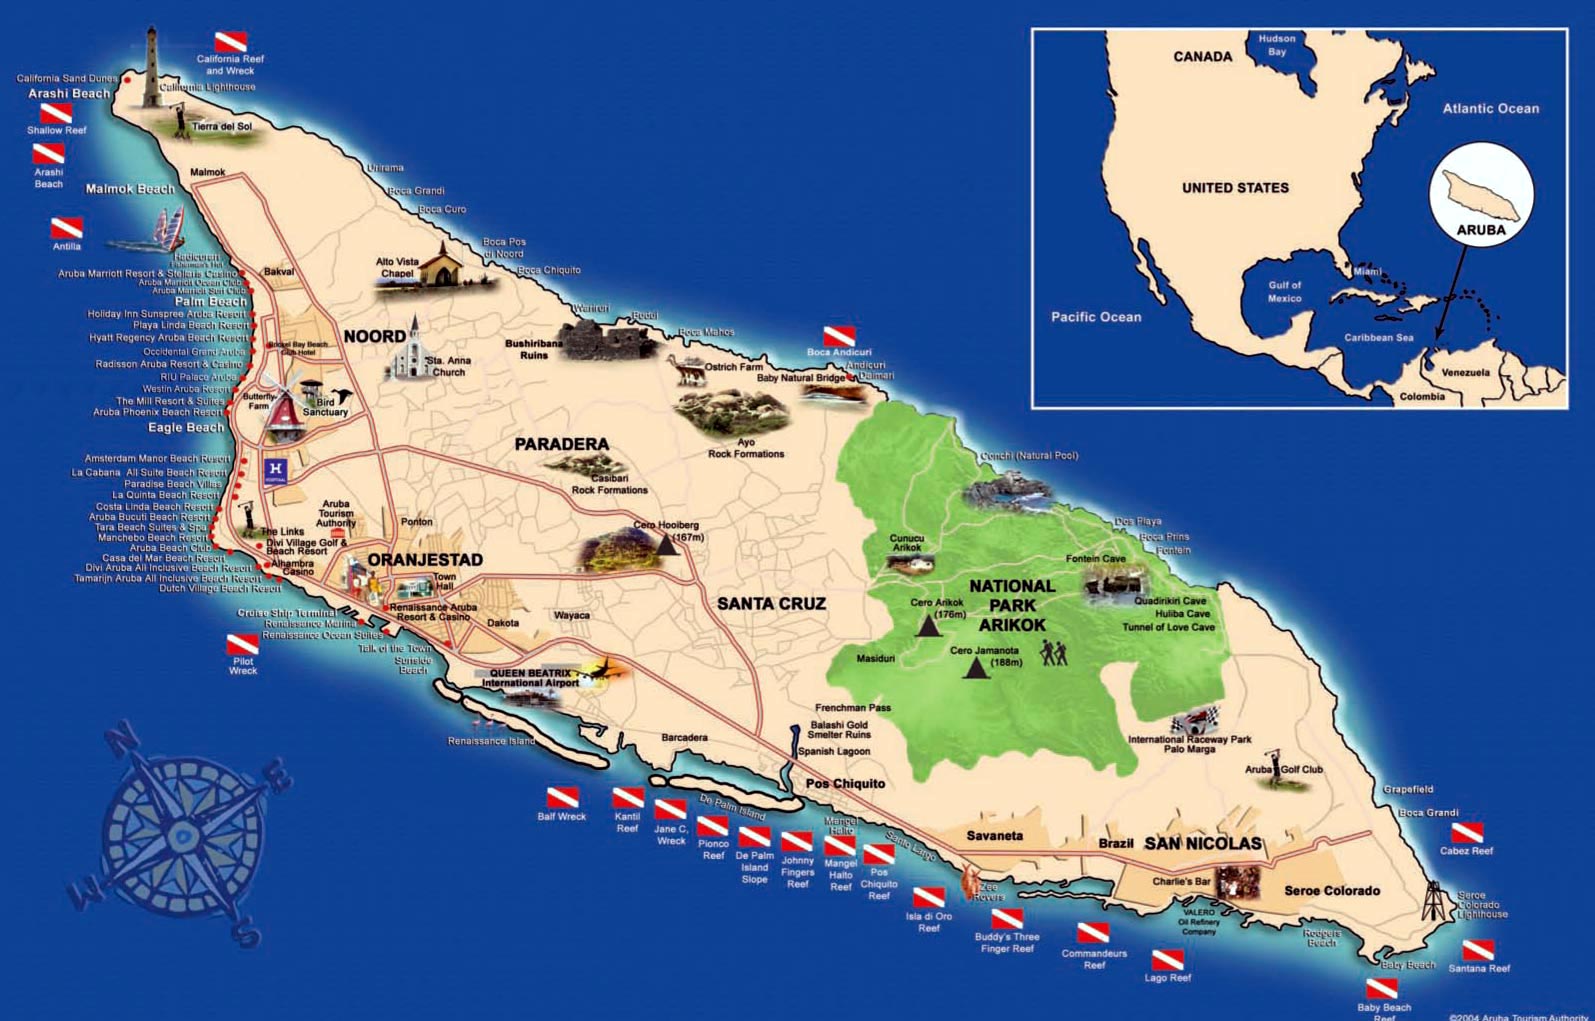 Карта острова Аруба